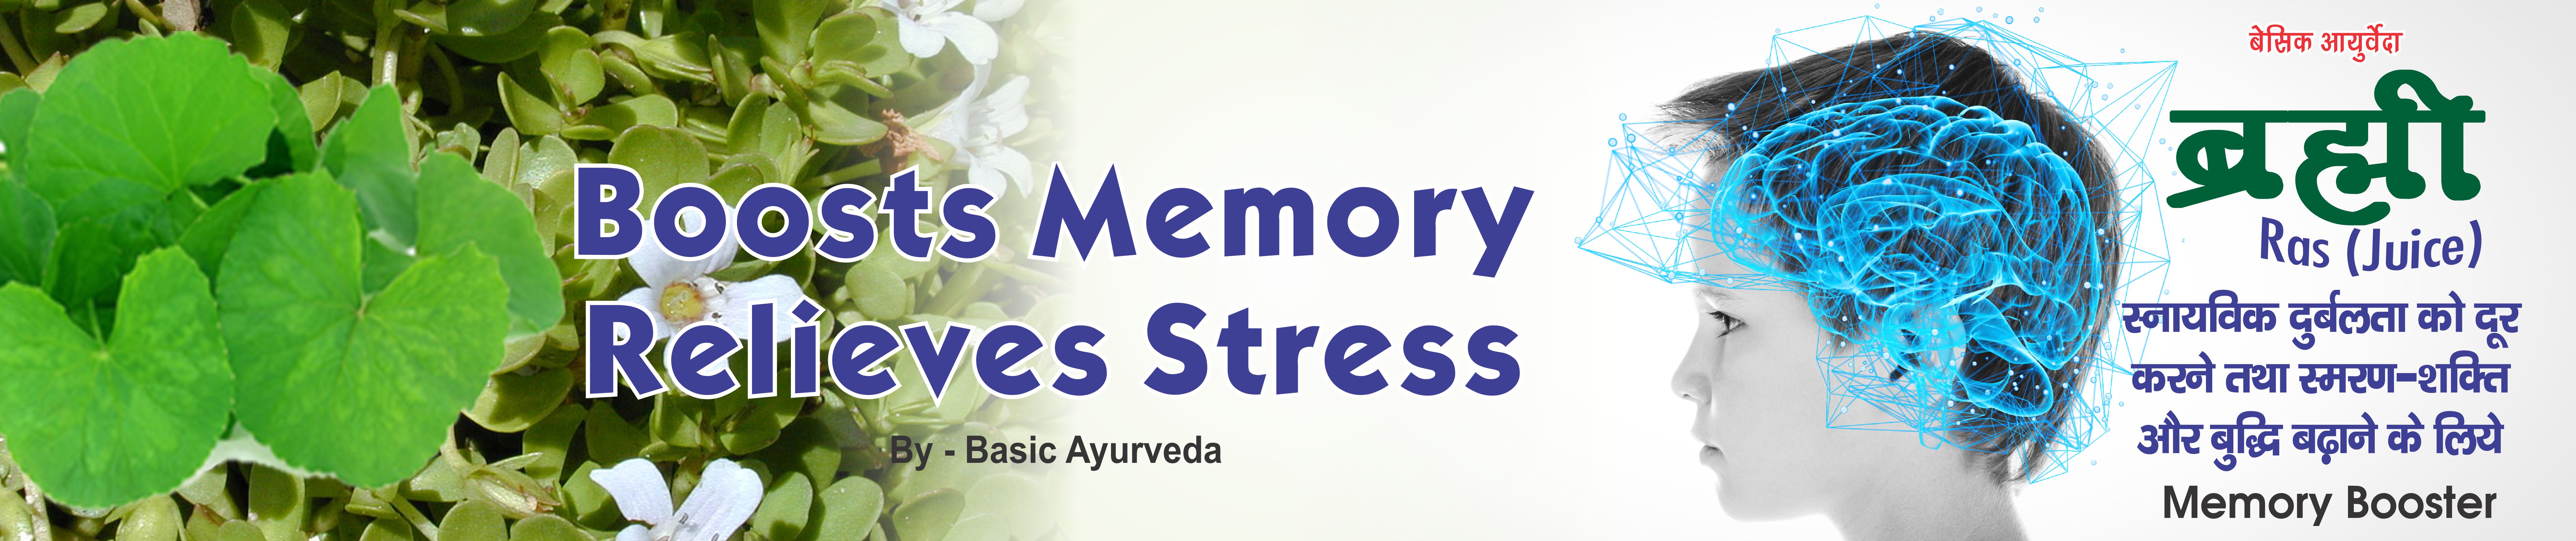 Brahmi Ras (Juice) Memory Booster